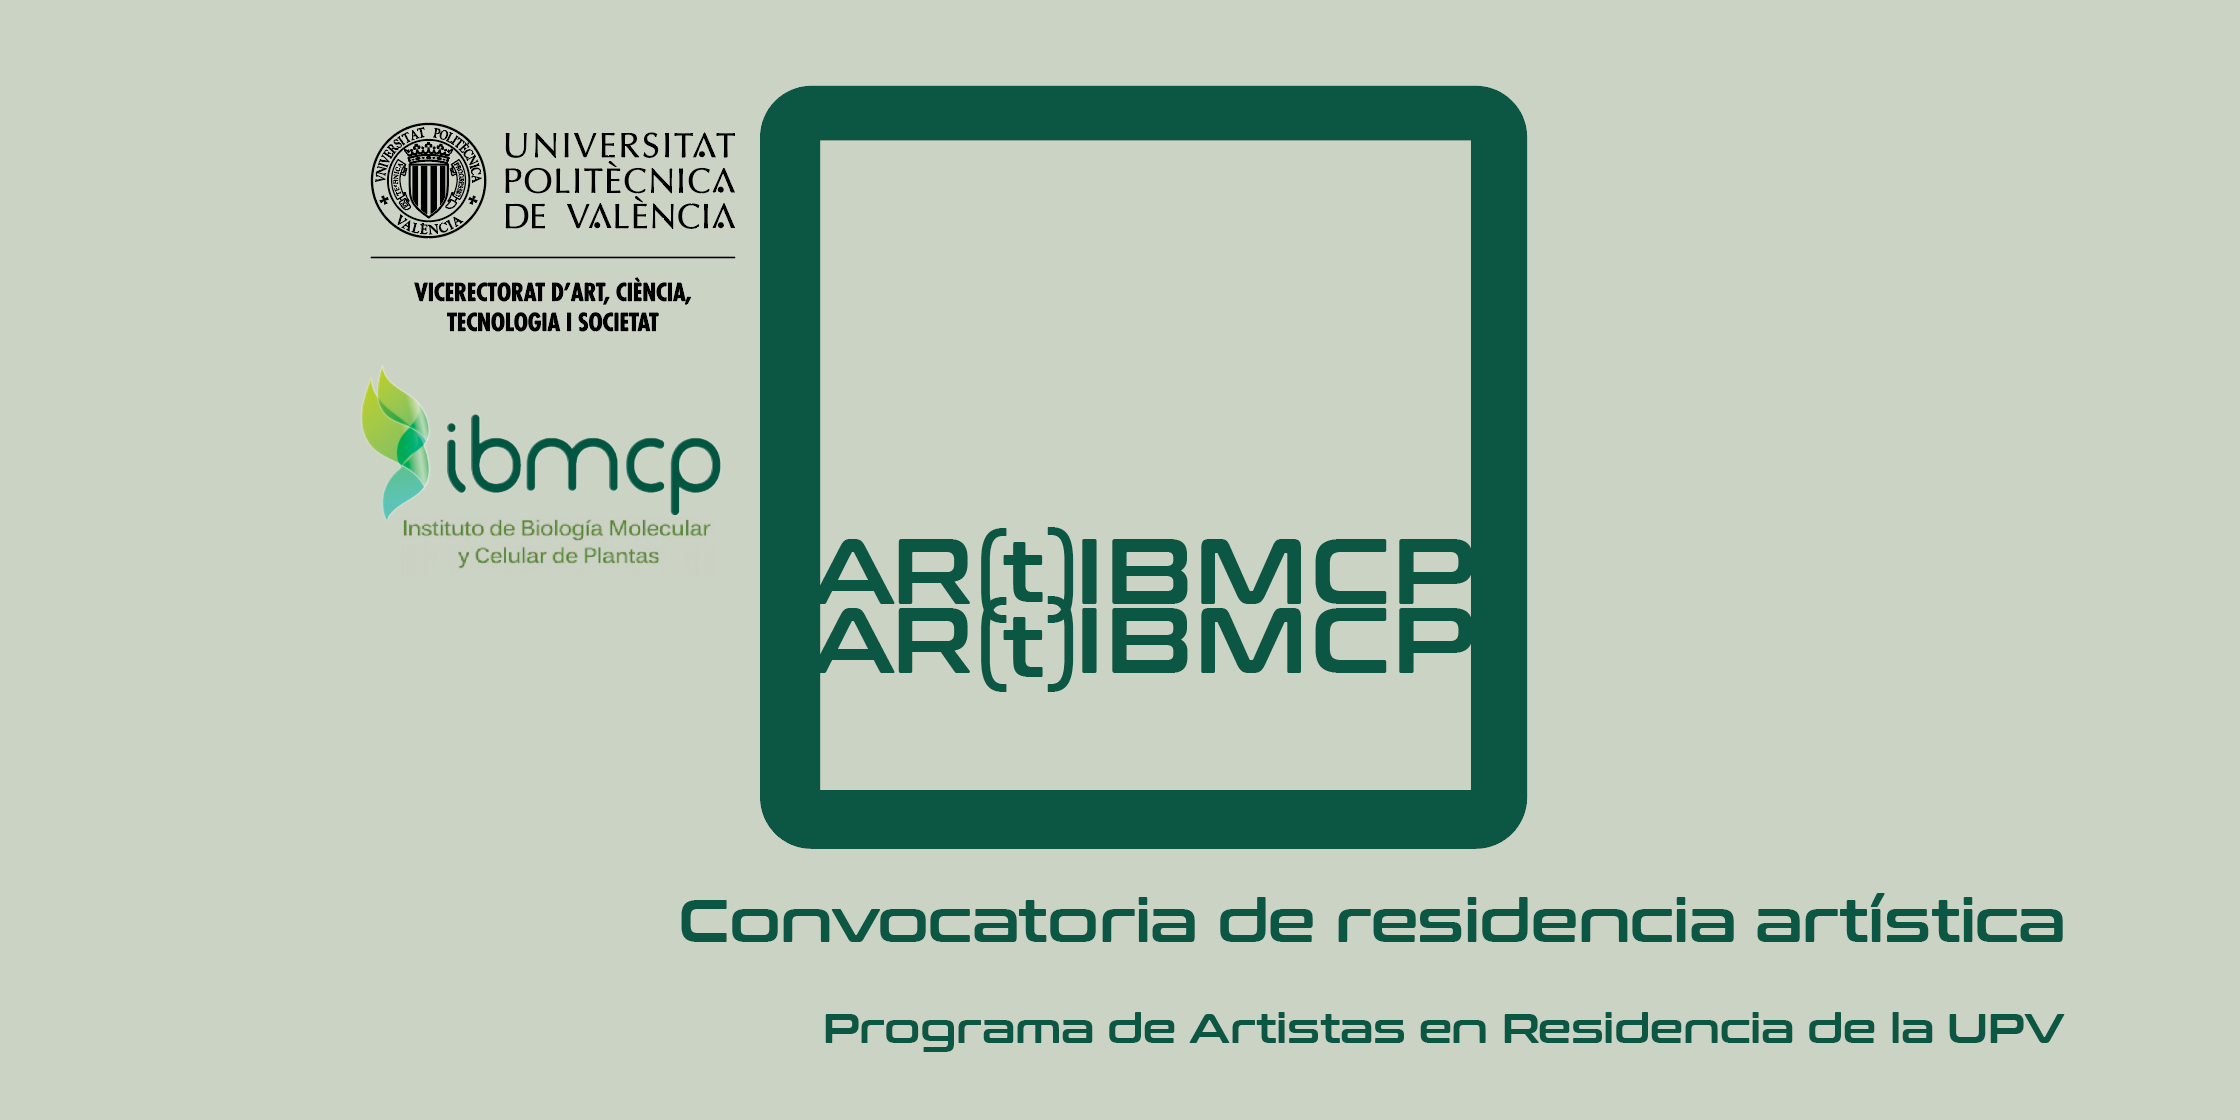 4. AR(t)IBMCP Residencia Artistica